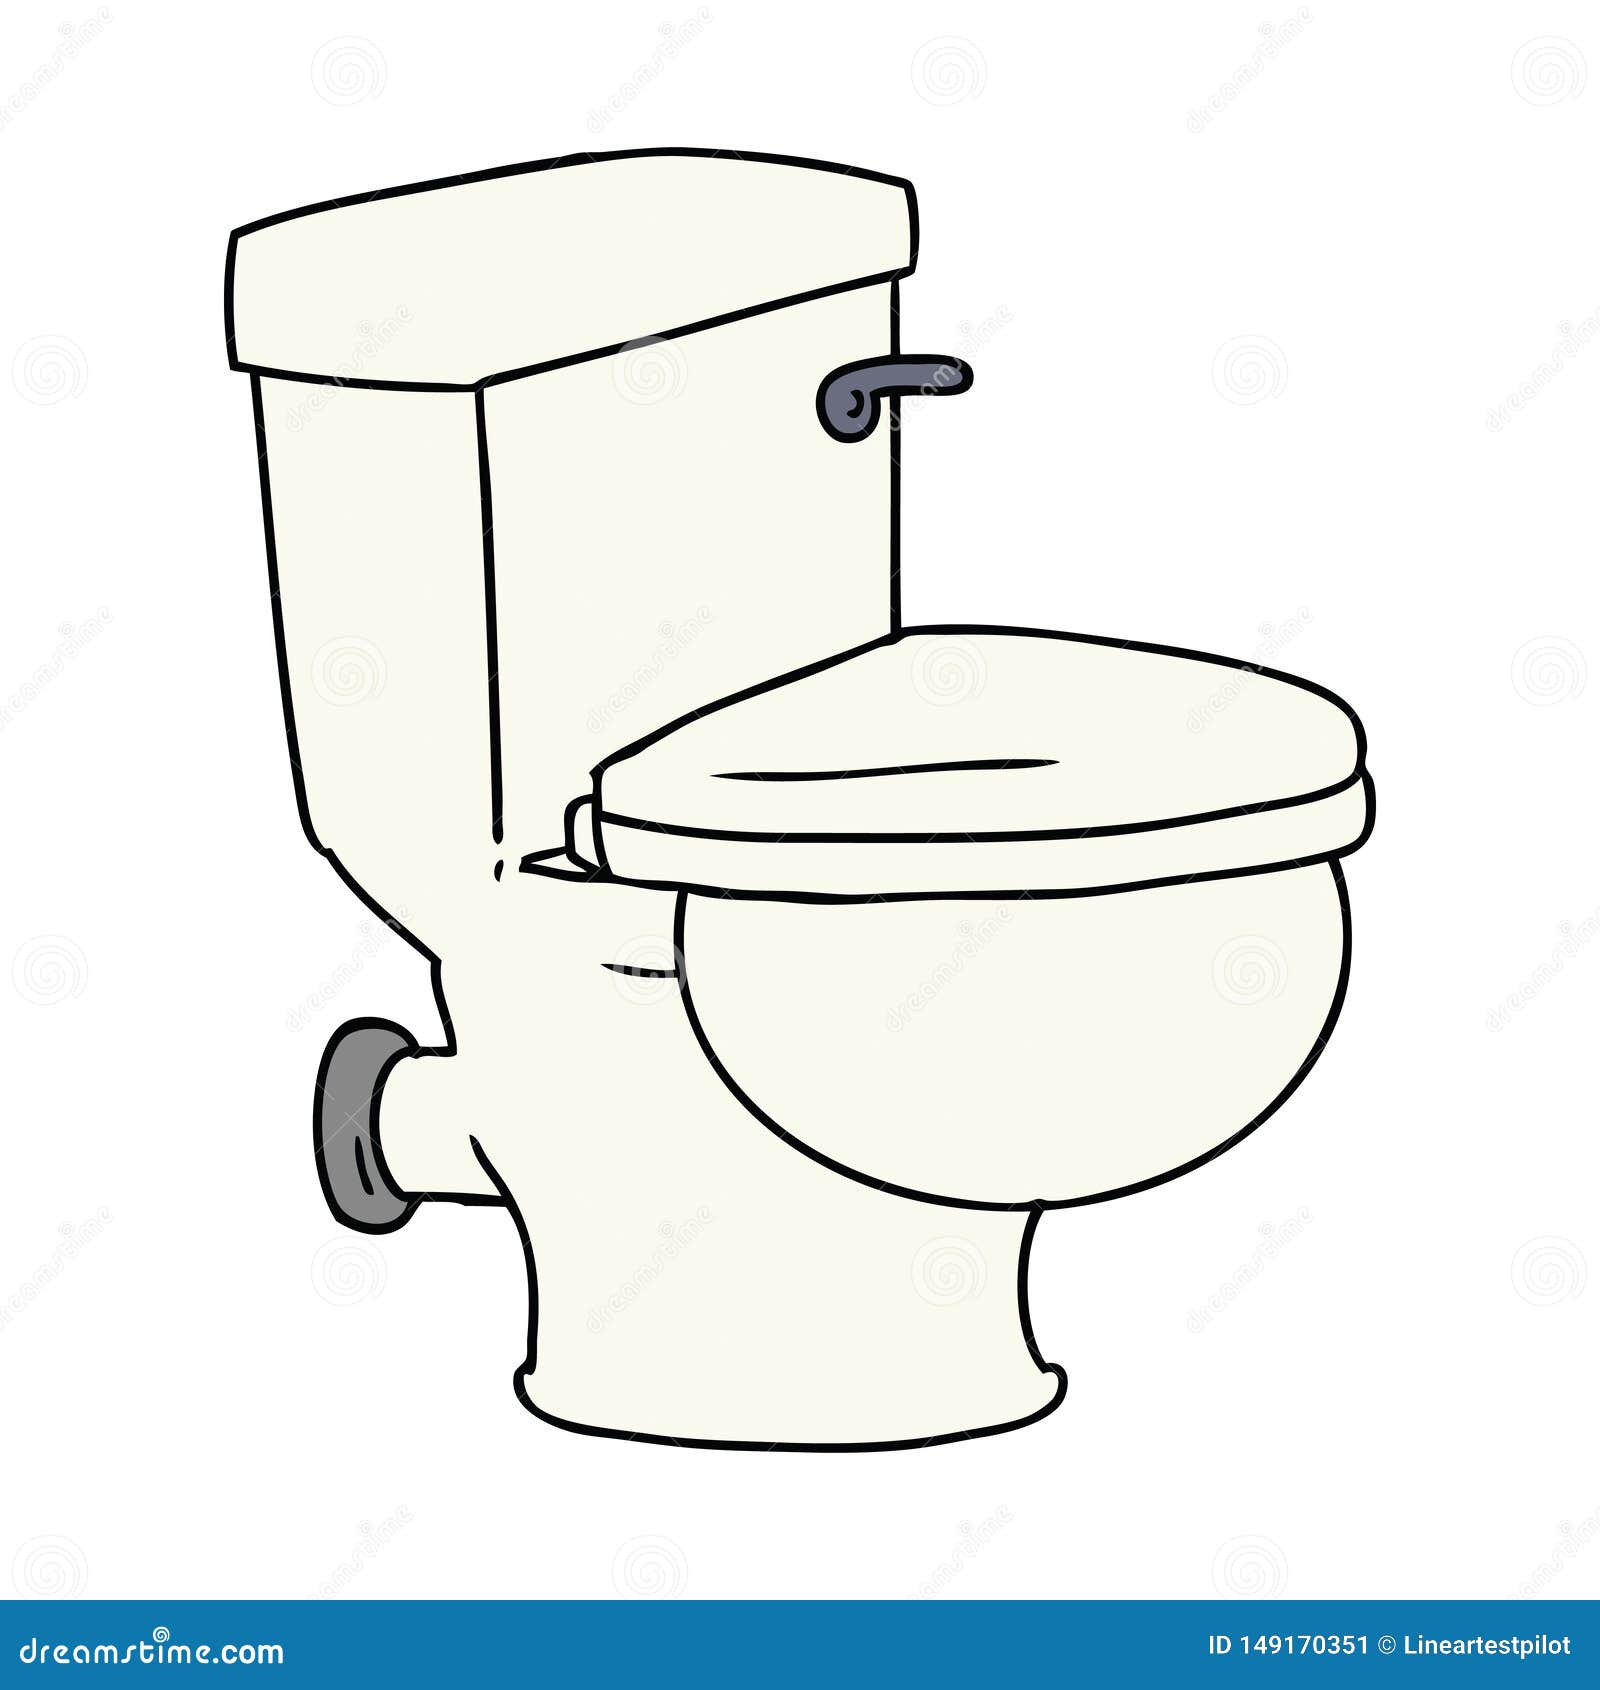 Cartoon Doodle of a Bathroom Toilet Stock Vector - Illustration of artwork,  cartoon: 149170351